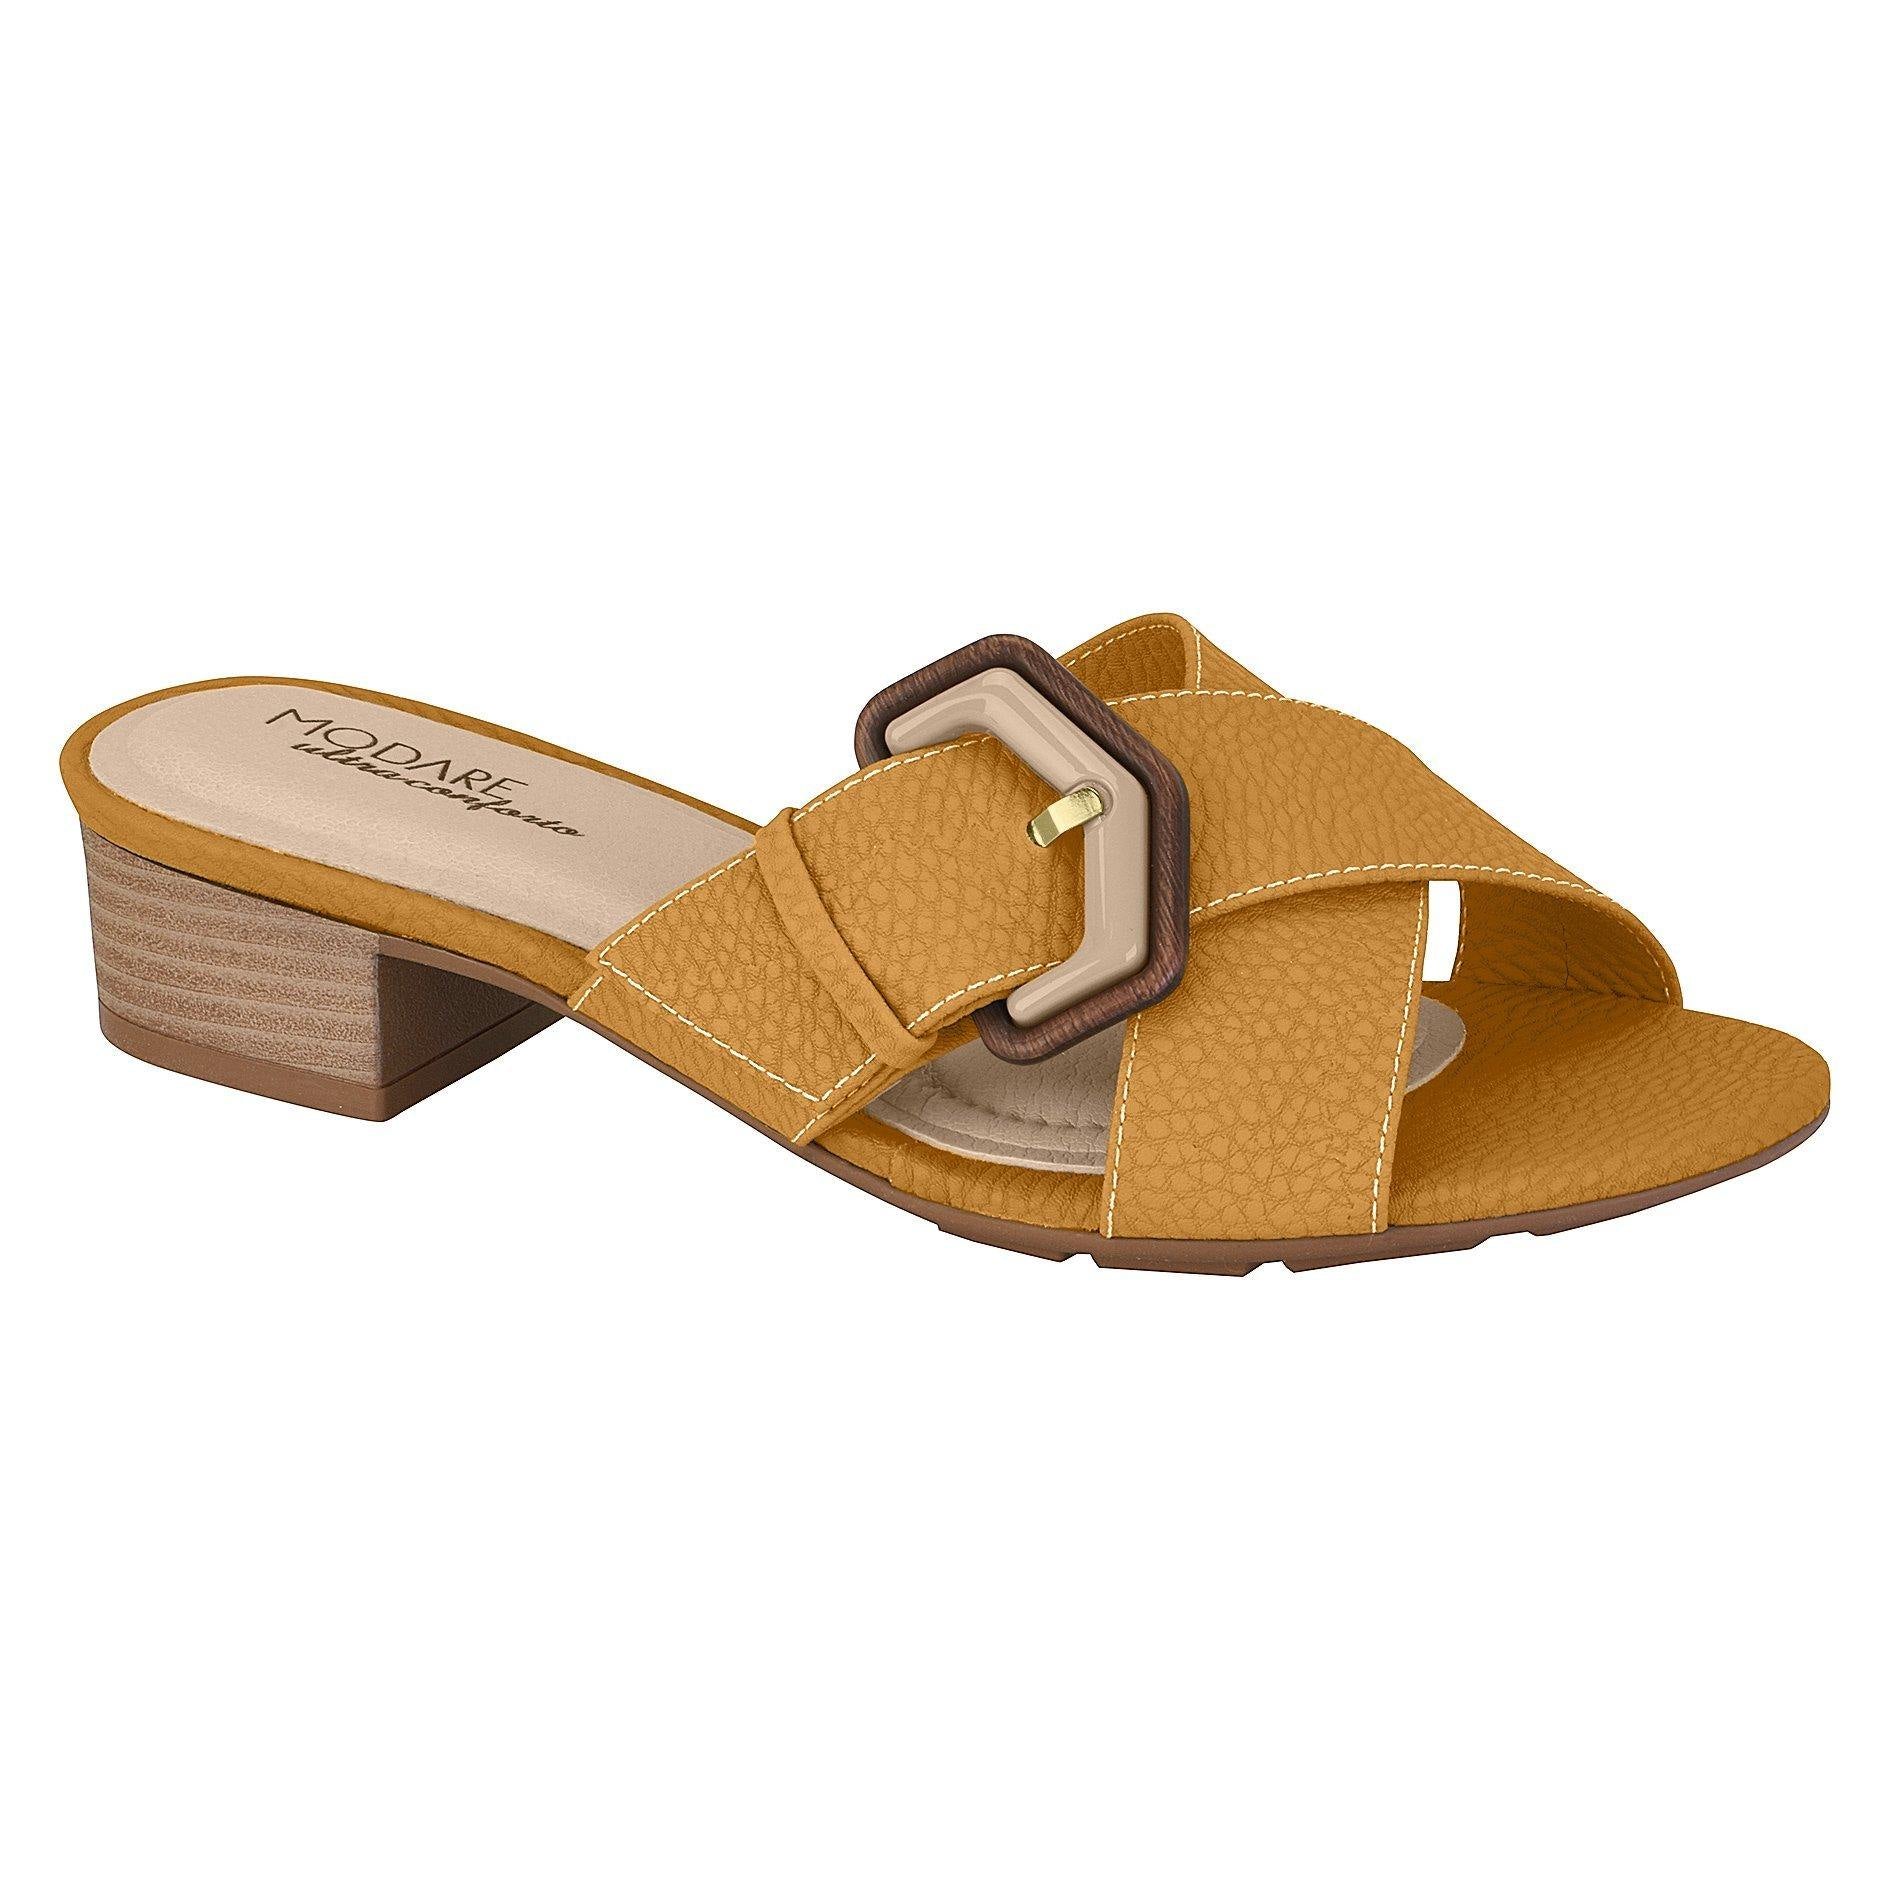 Modare 7136-110 Low Heel Slip-on Sandal in Mustard